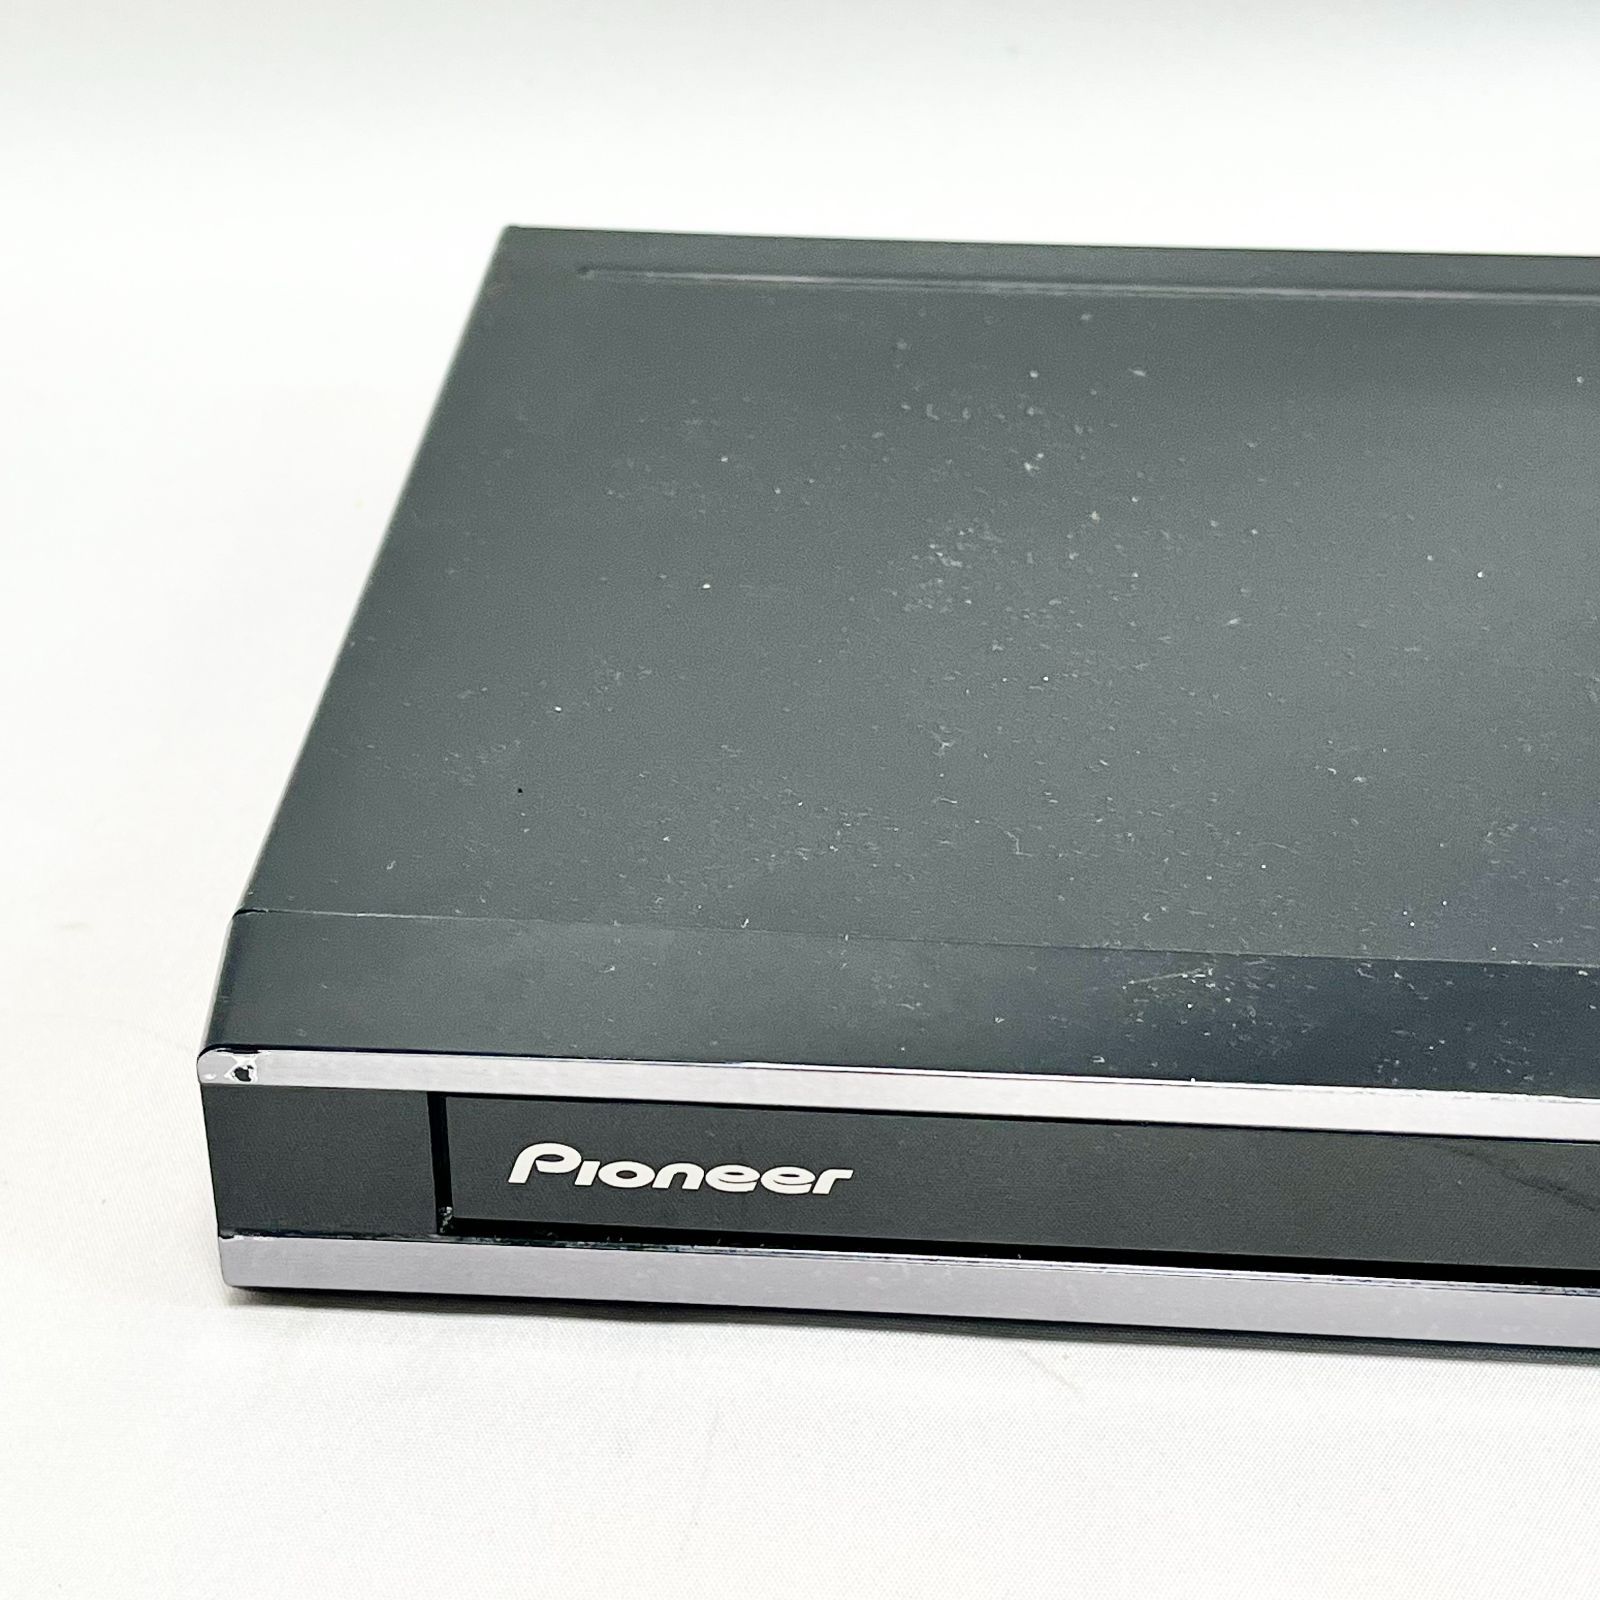 Pioneer ブルーレイディスクプレーヤー アップスケーリング機能搭載 ブラック BDP-3130-K リモコンRC-3071付属